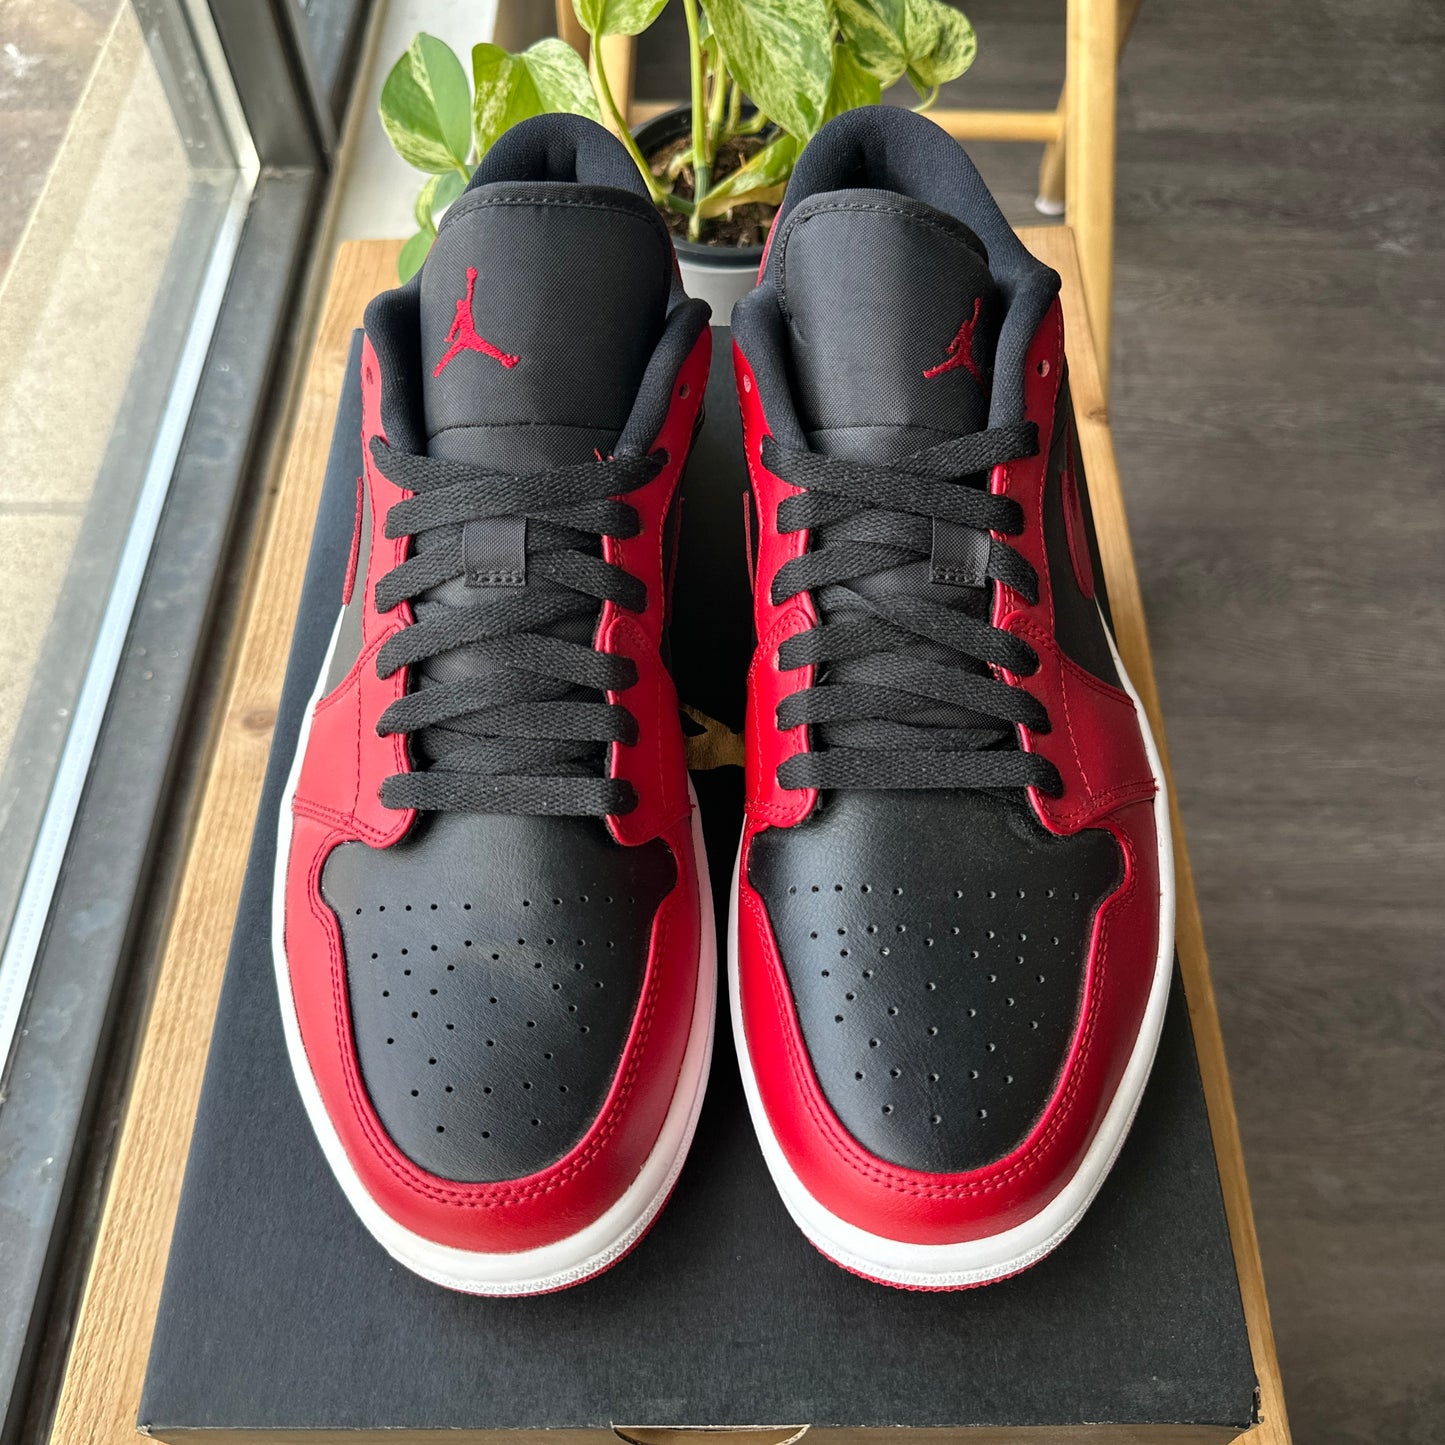 Brand New Air Jordan 1 Low "Reverse Bred" Size 11